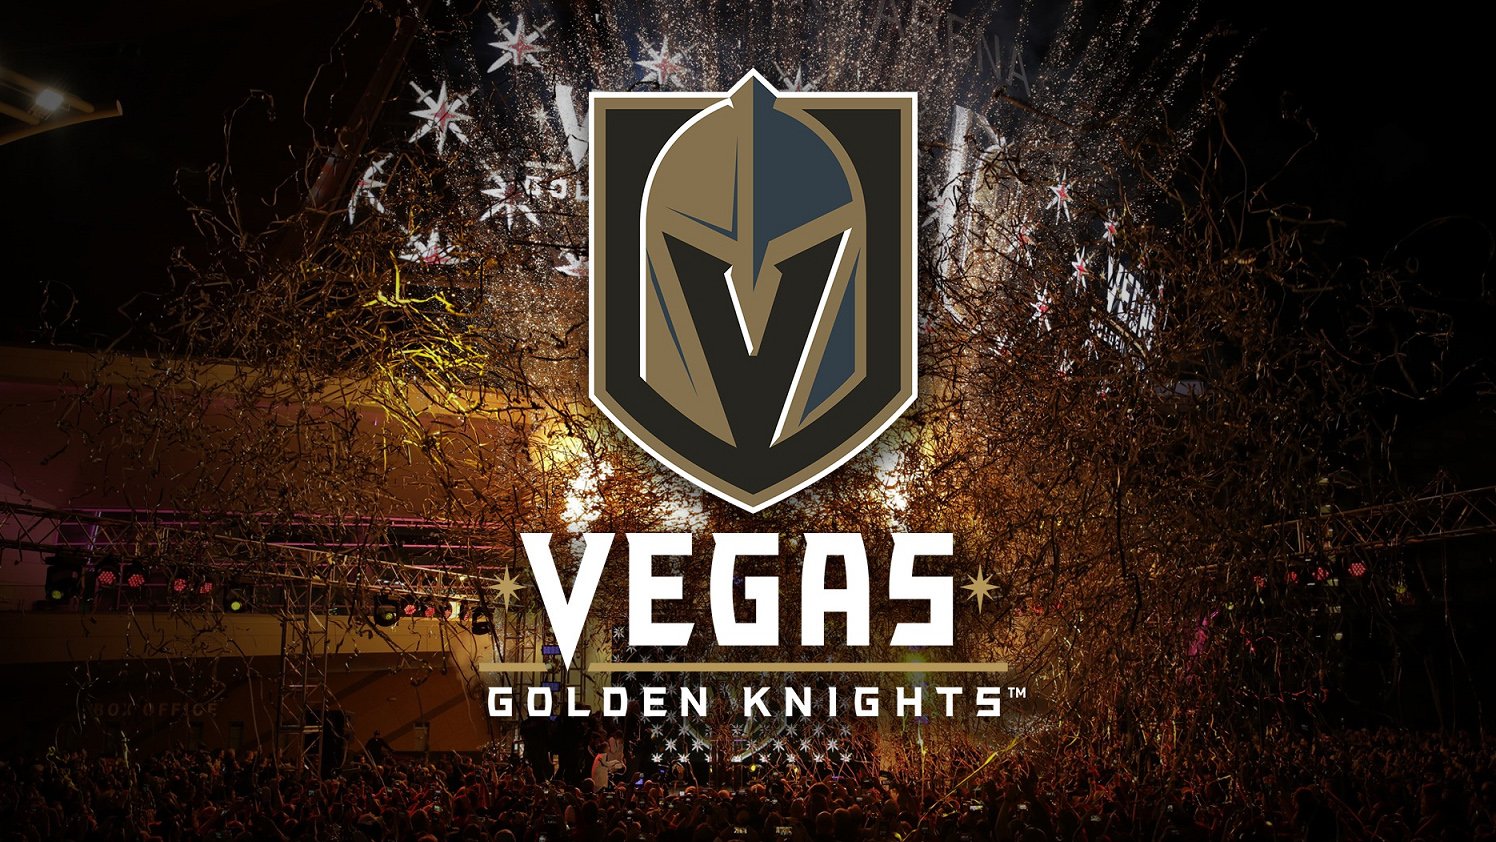 Vegas Goes Gold